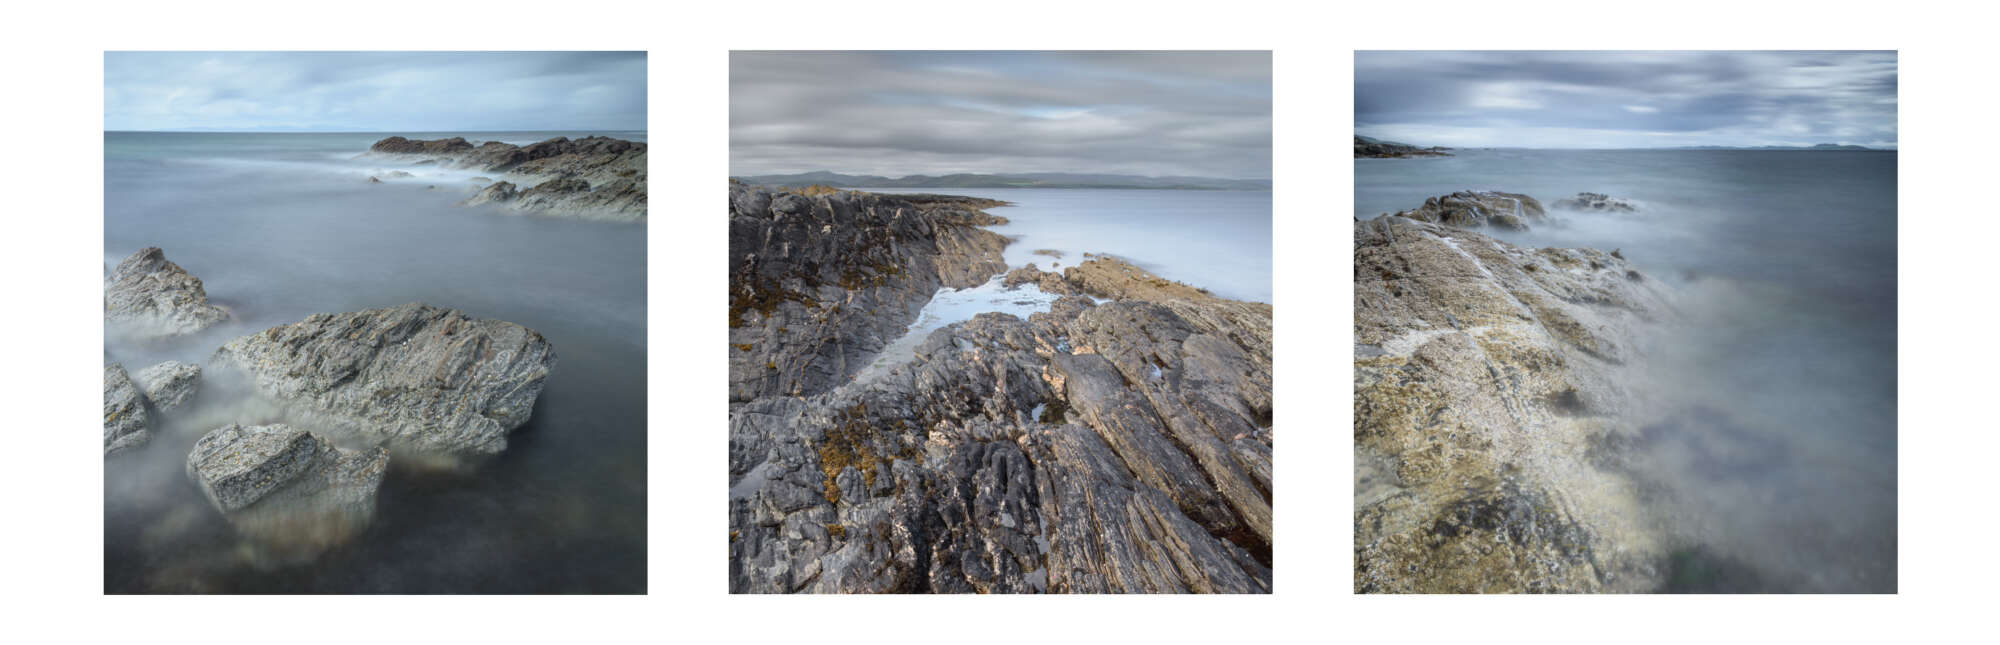 Kintyre Coastal Triptic by Michael Pilkington aspect2i